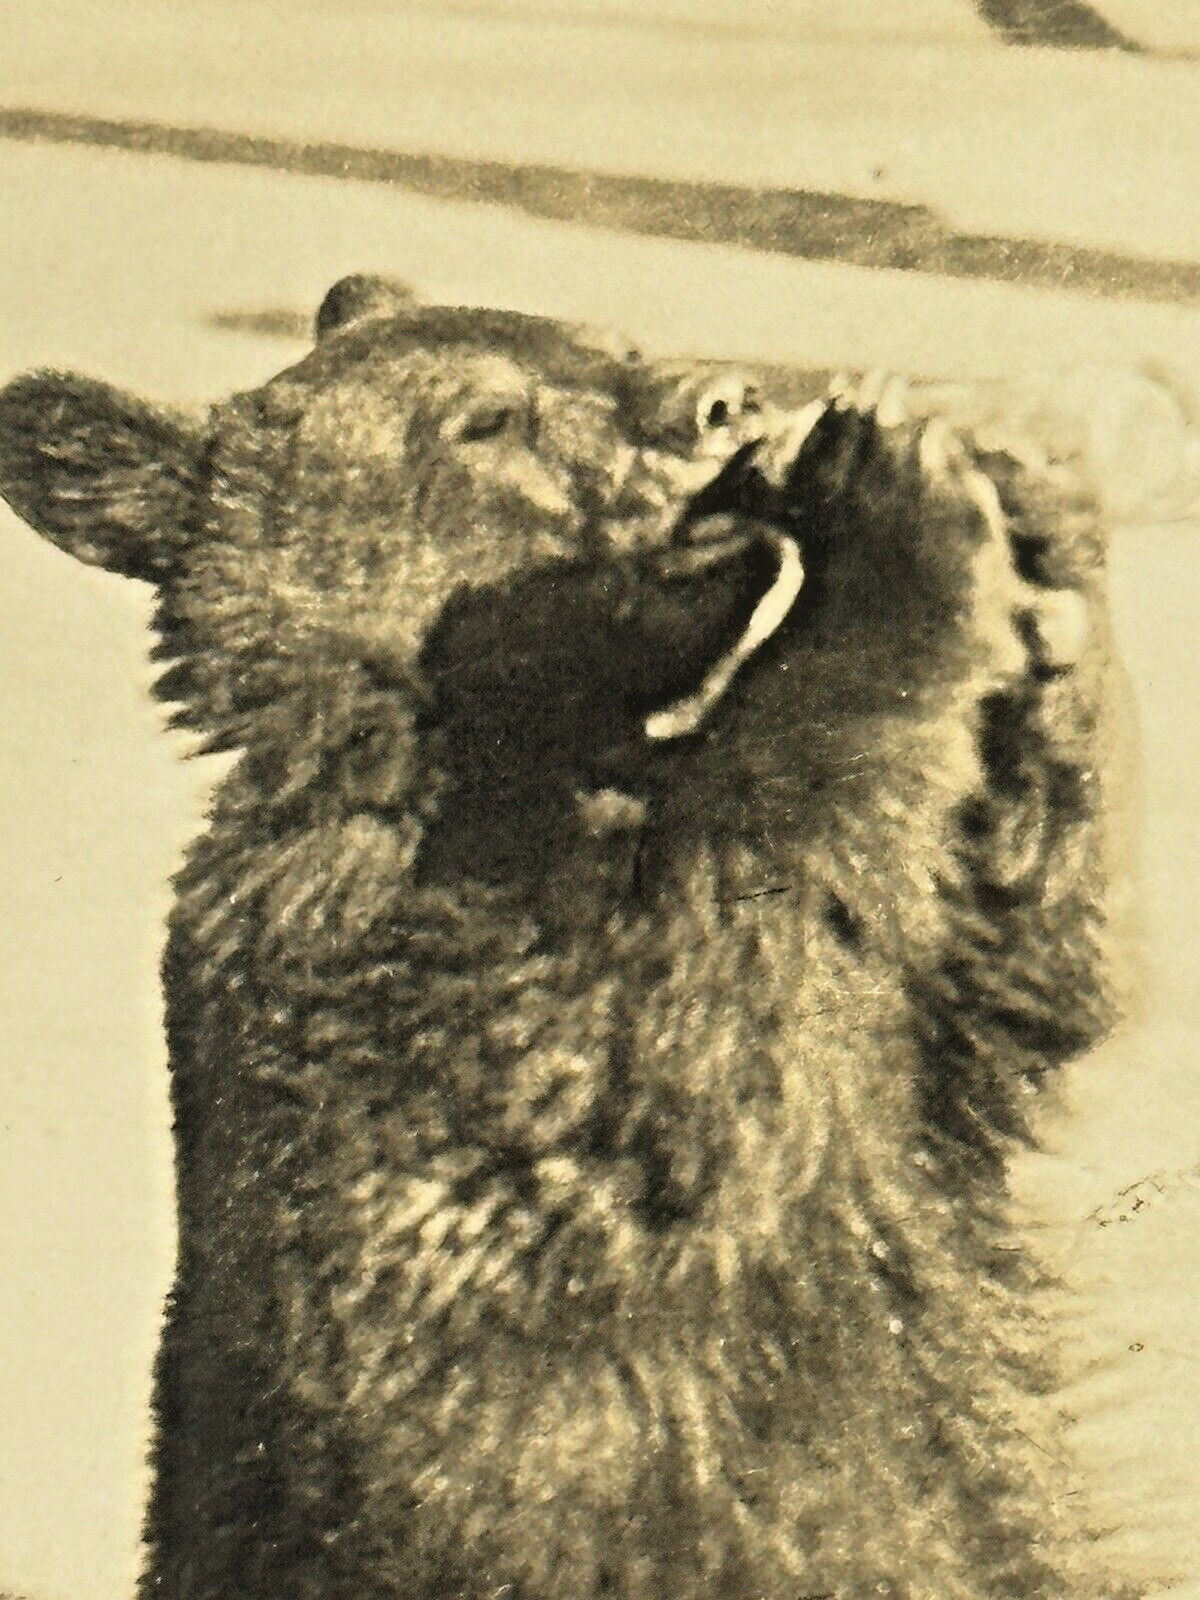 Maine Black Bear Cub Rppc Real Photo Postcard Pet Drinks from Bottle C.1938